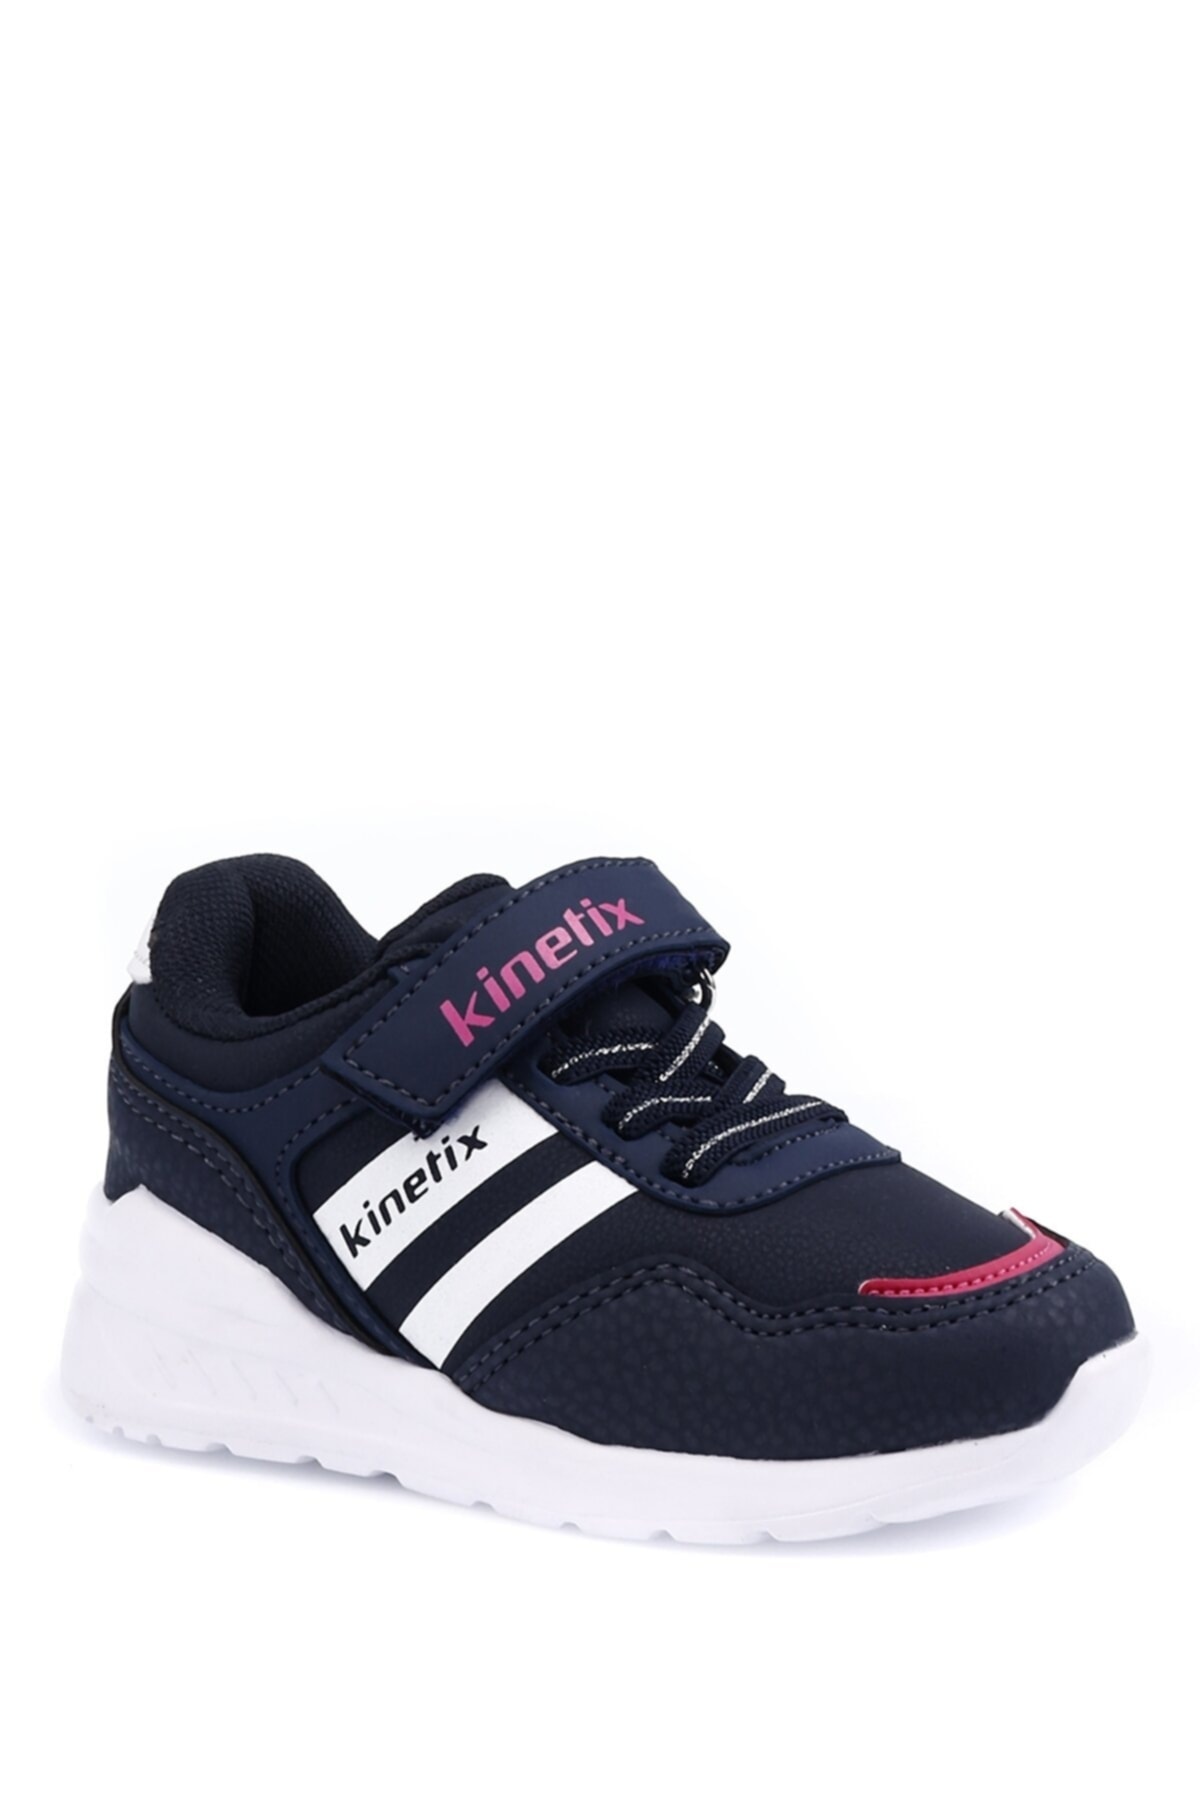 KINETIX Confess J 1pr Girls Navy Sneaker